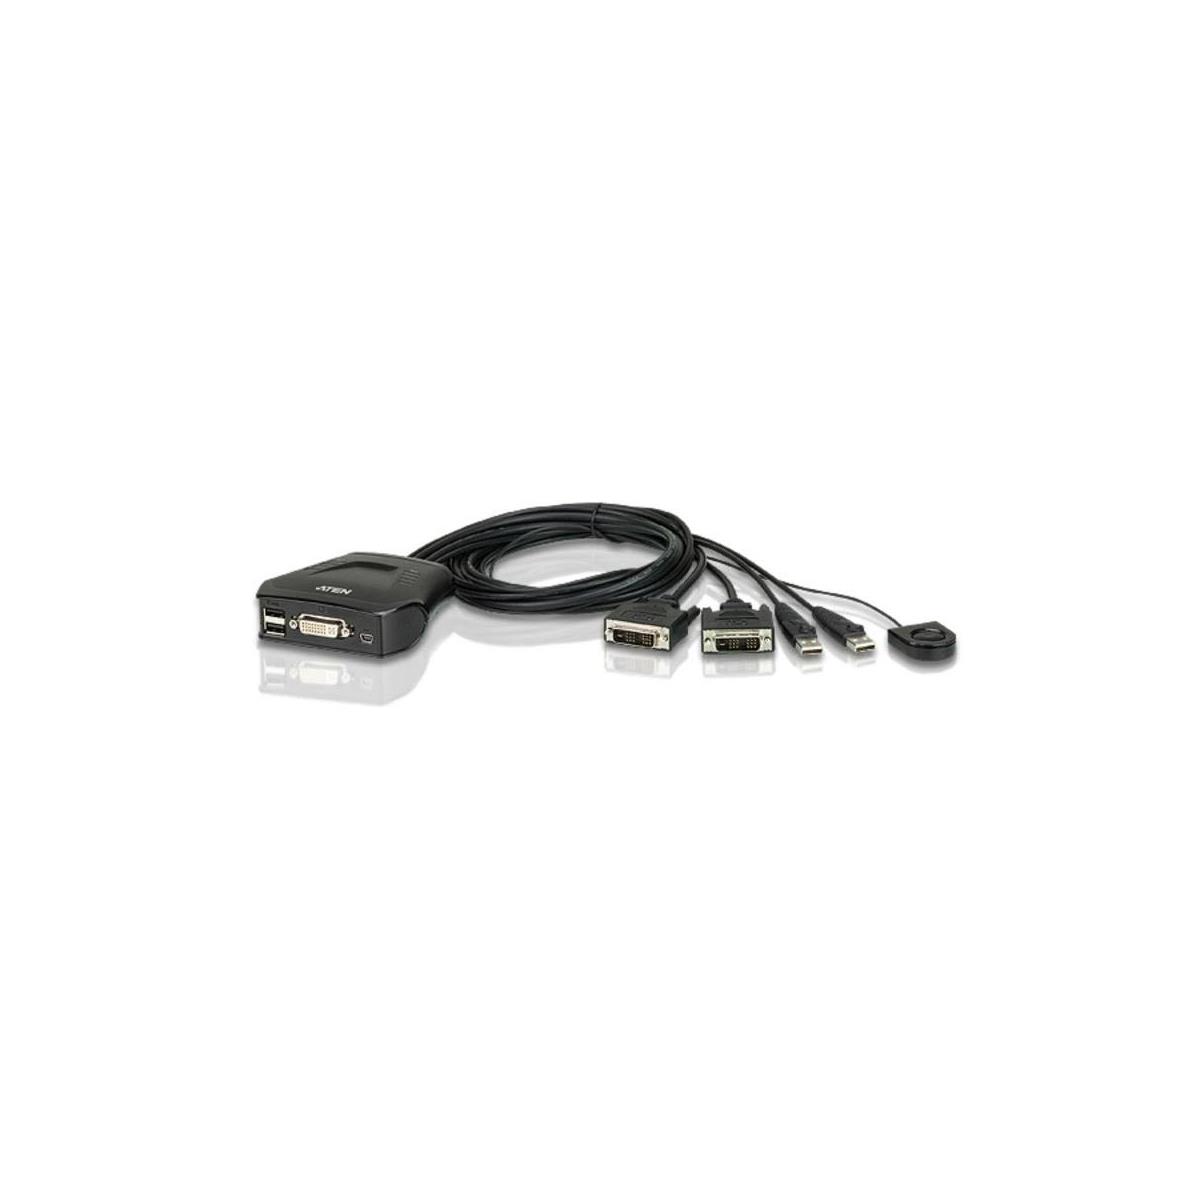 

Aten CS22D 2-Port USB DVI KVM Switch